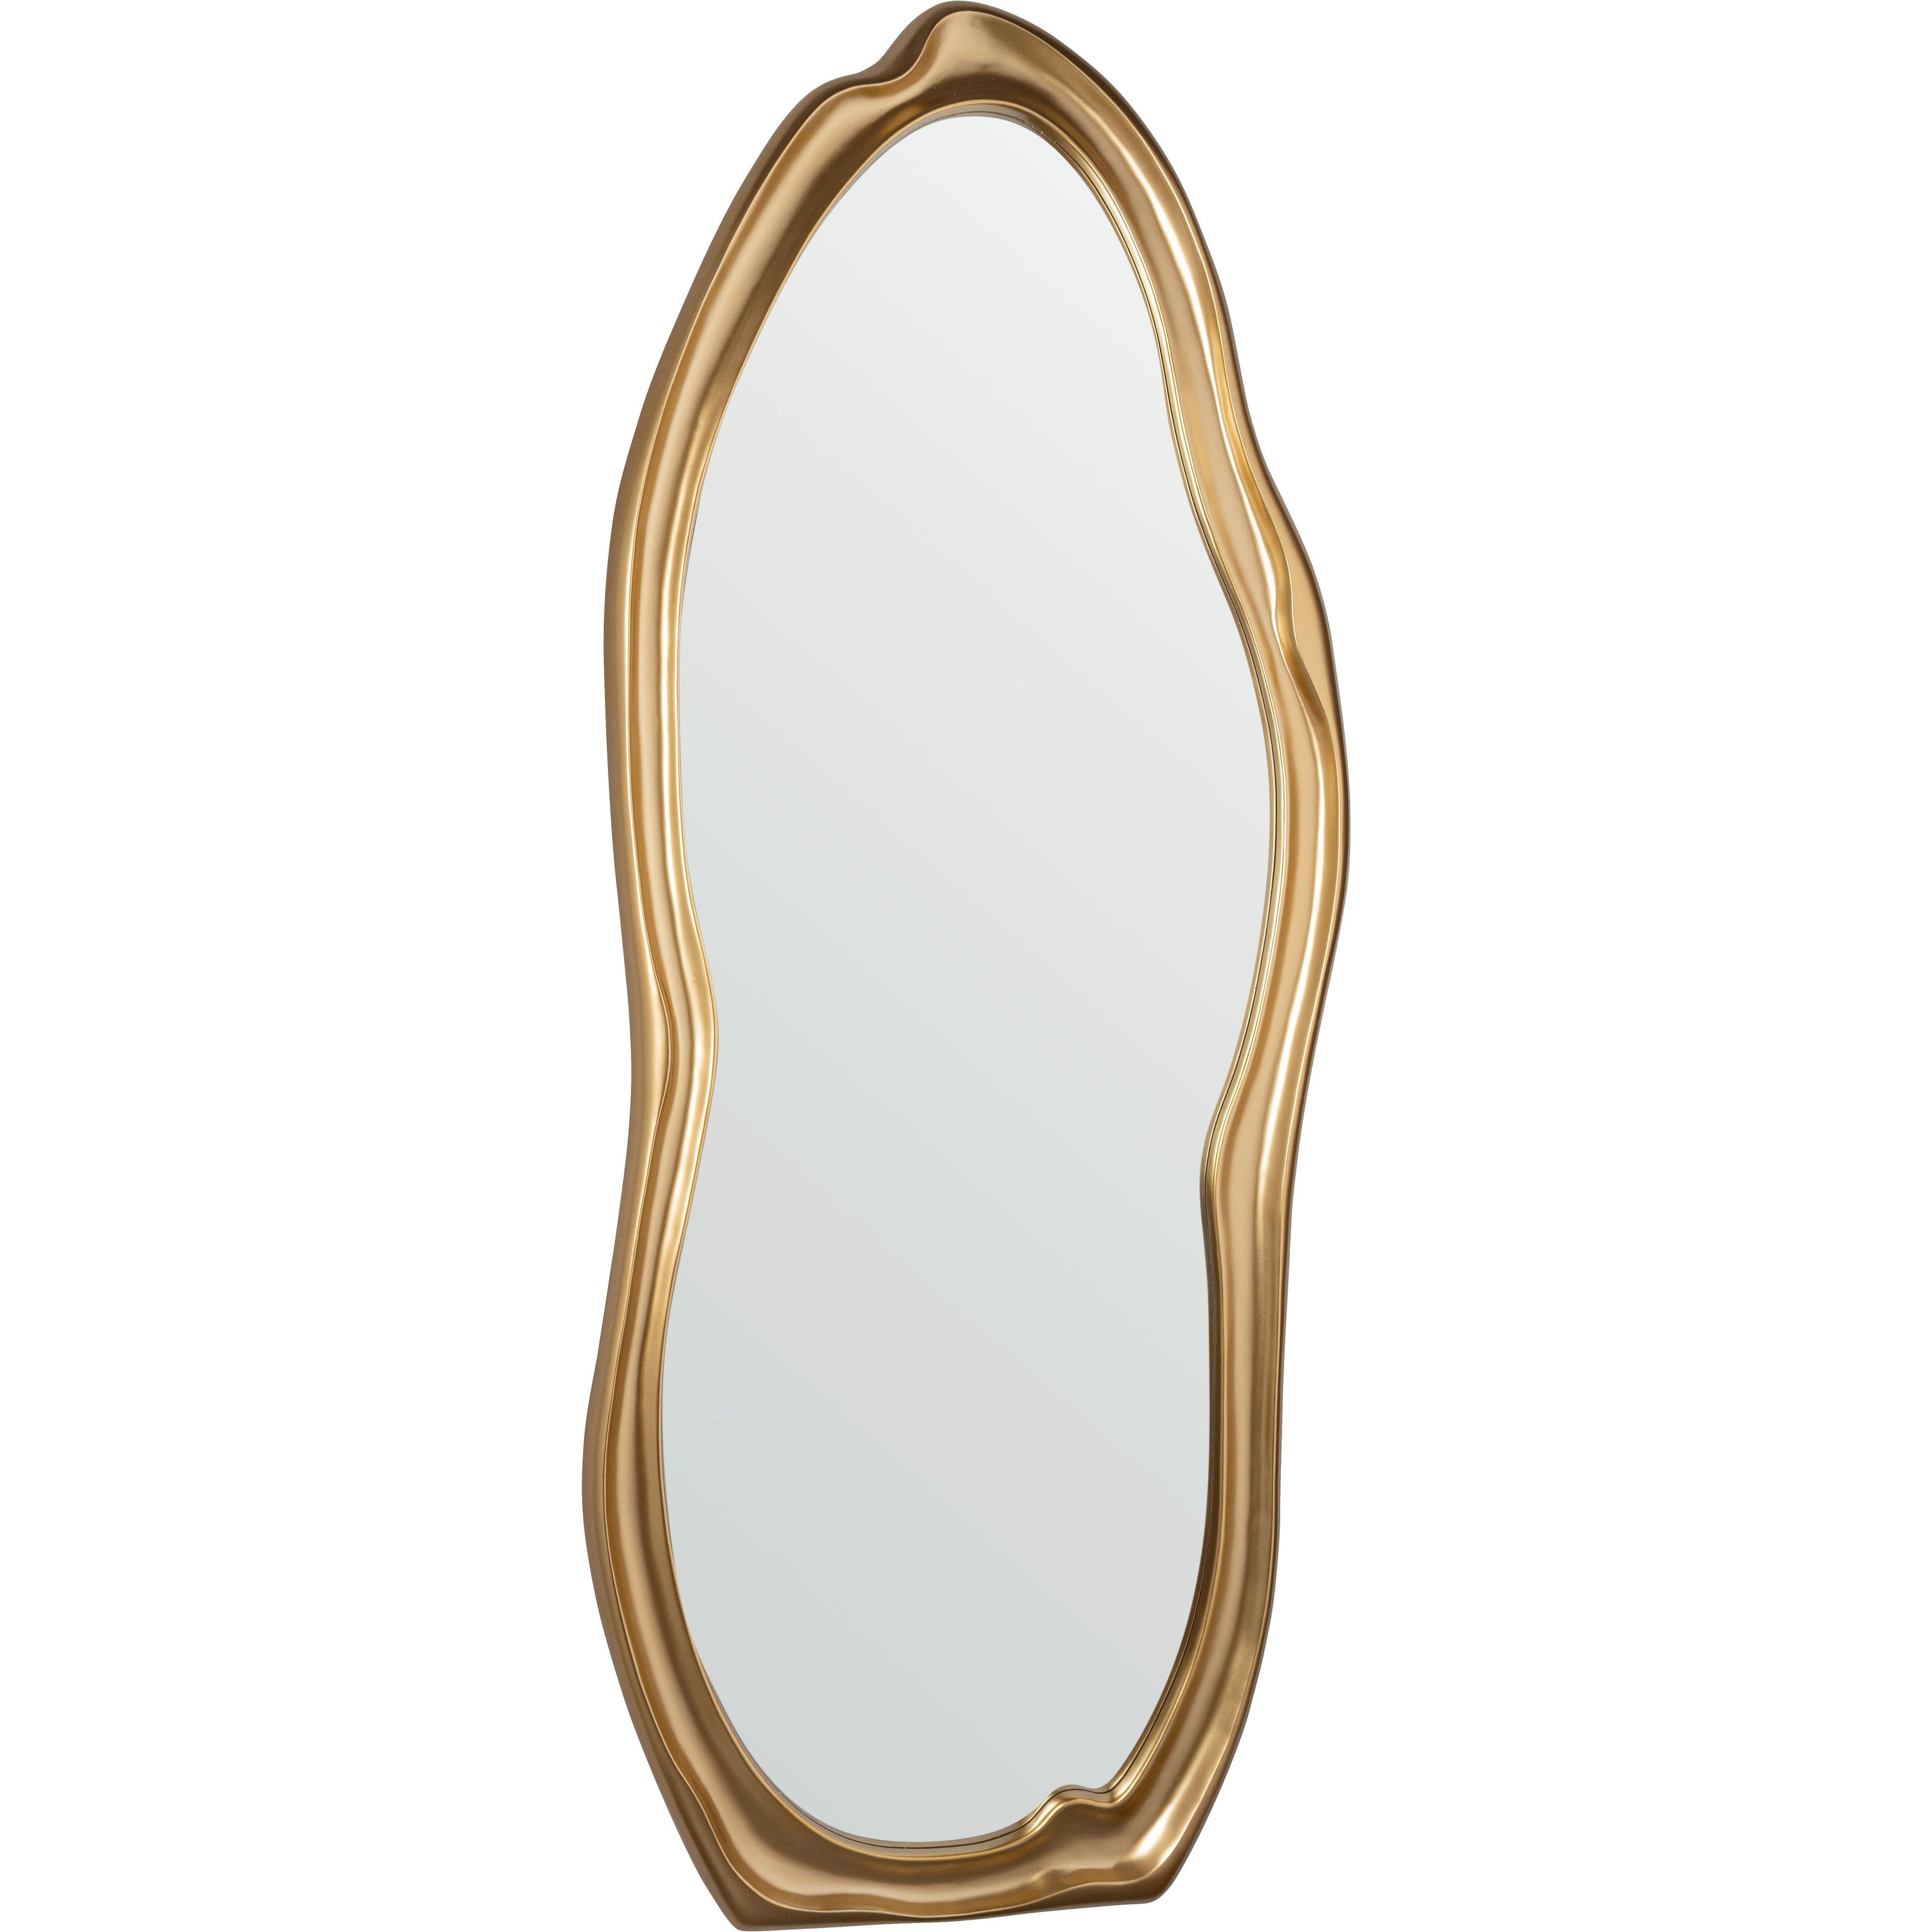 FELIPE veidrodis, 68X173, aukso spalvos